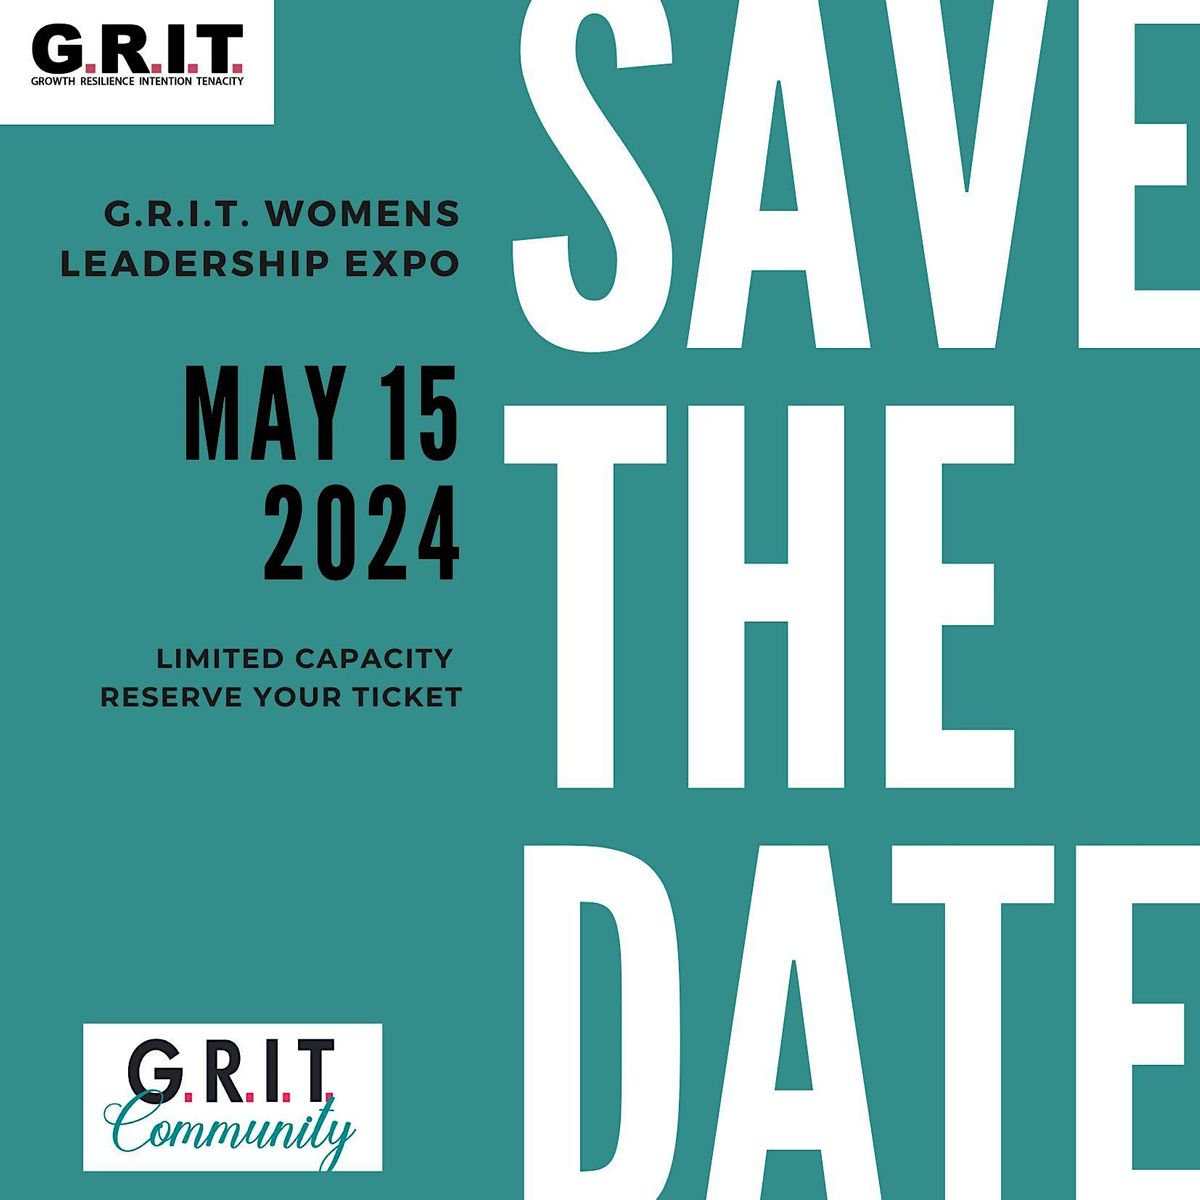 G.R.I.T. Womens Leadership Expo